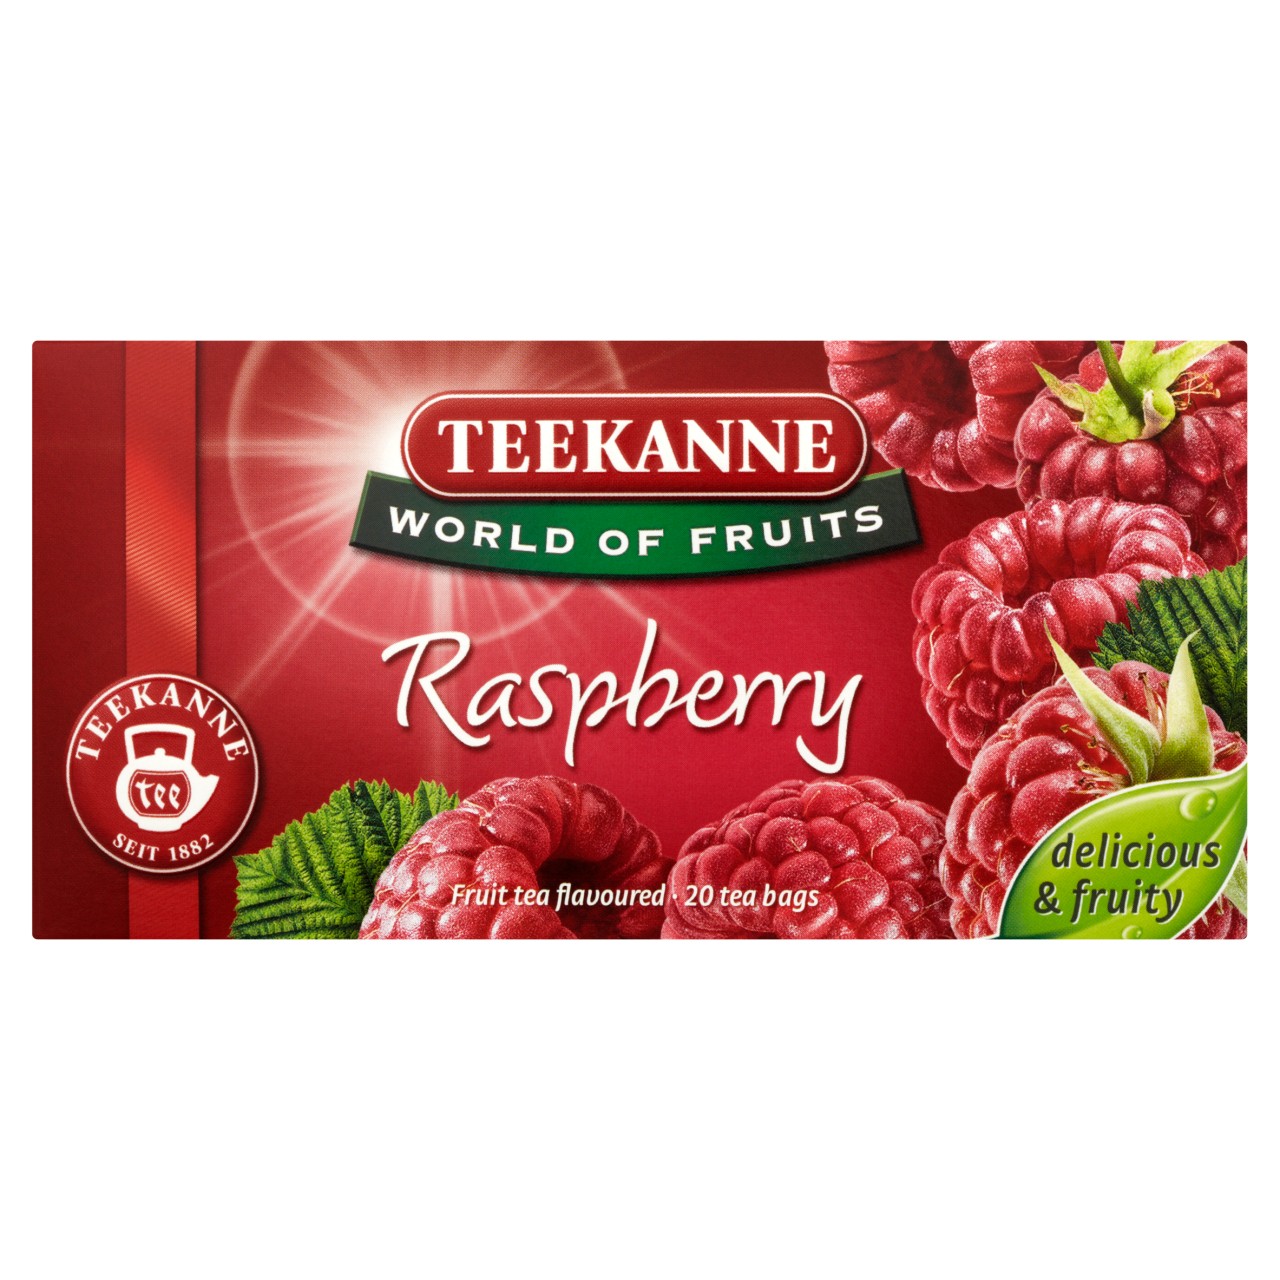 Teekanne World of Fruits Raspberry Mieszanka herbatek owocowych 50 g (20 torebek)